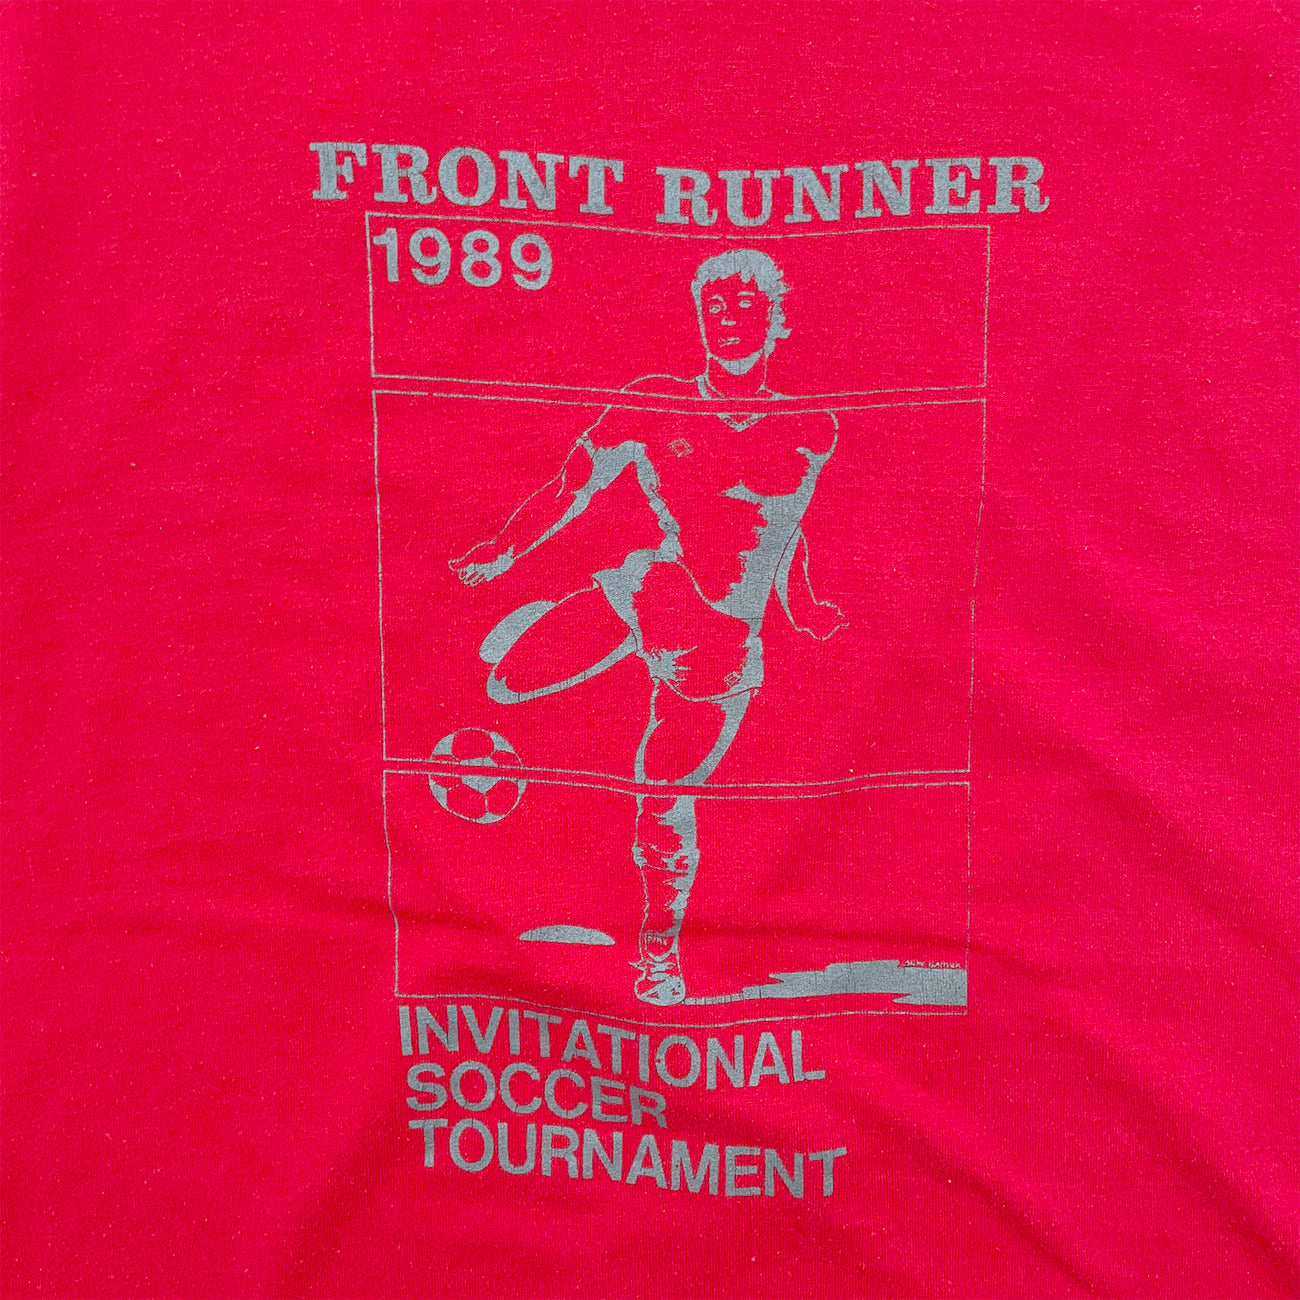 1989 Front Runner Invitational T-Shirt - M